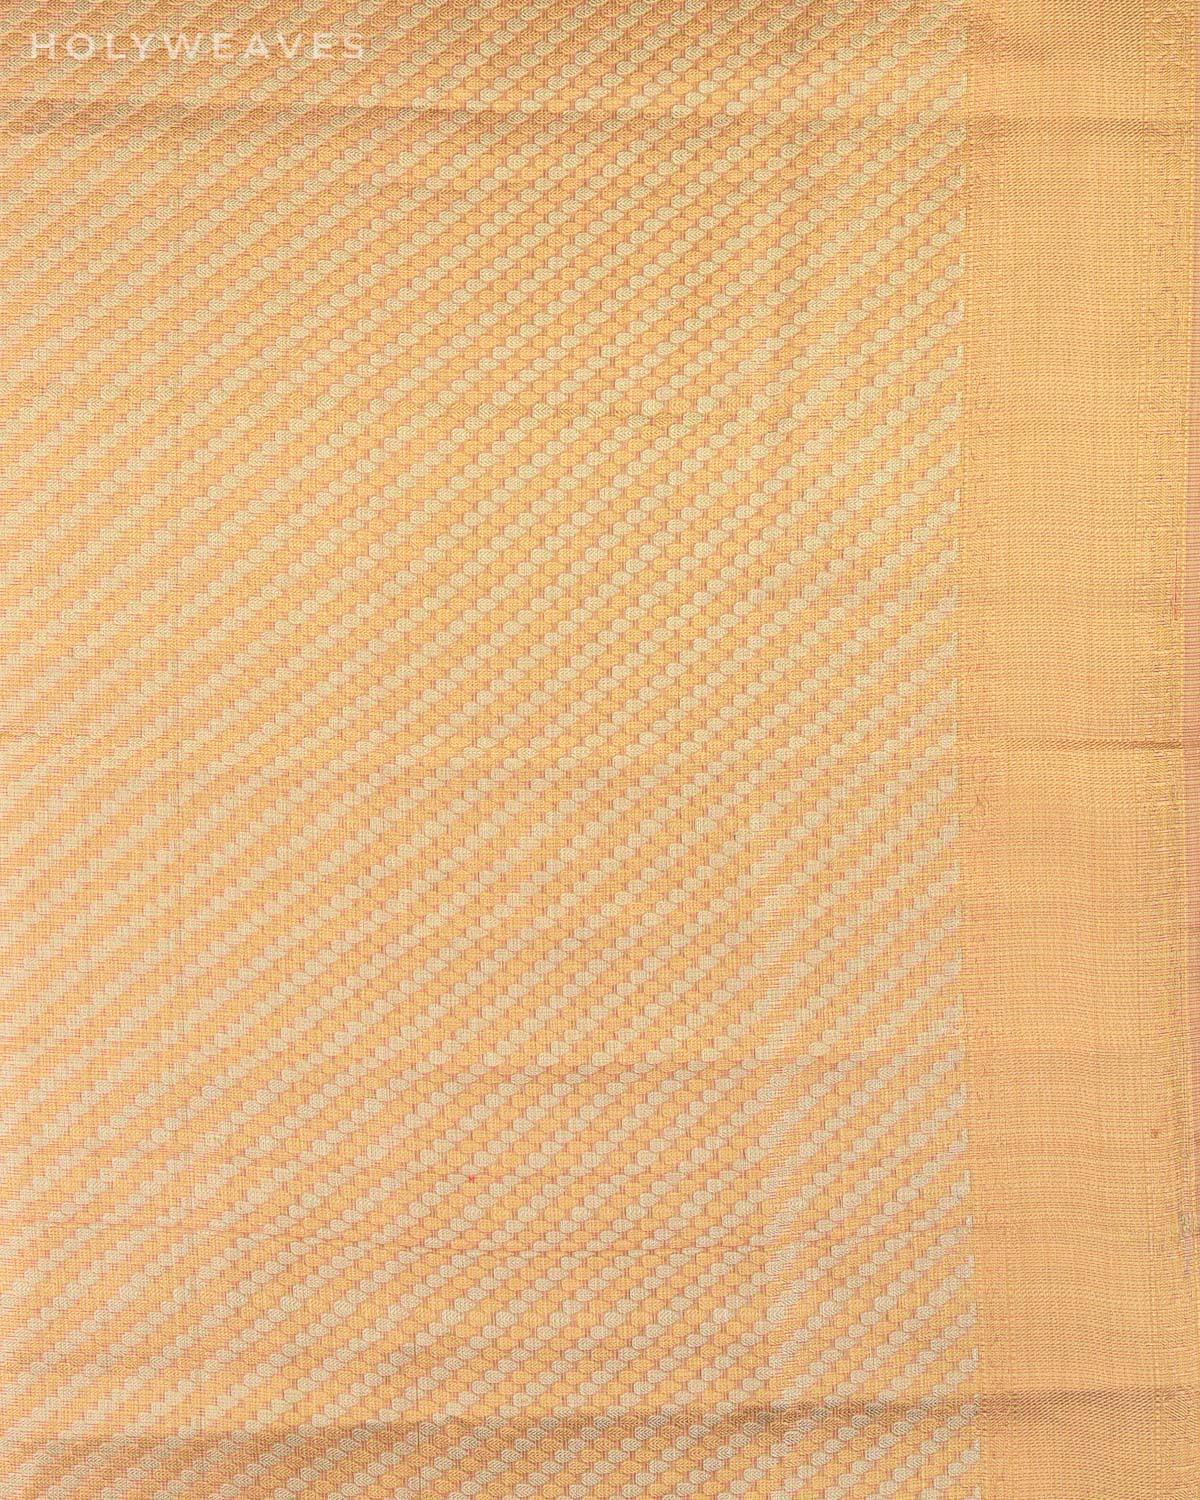 Metallic Peach Banarasi Chevron Sona Rupa Cutwork Brocade Woven Kota Tissue Saree - By HolyWeaves, Benares